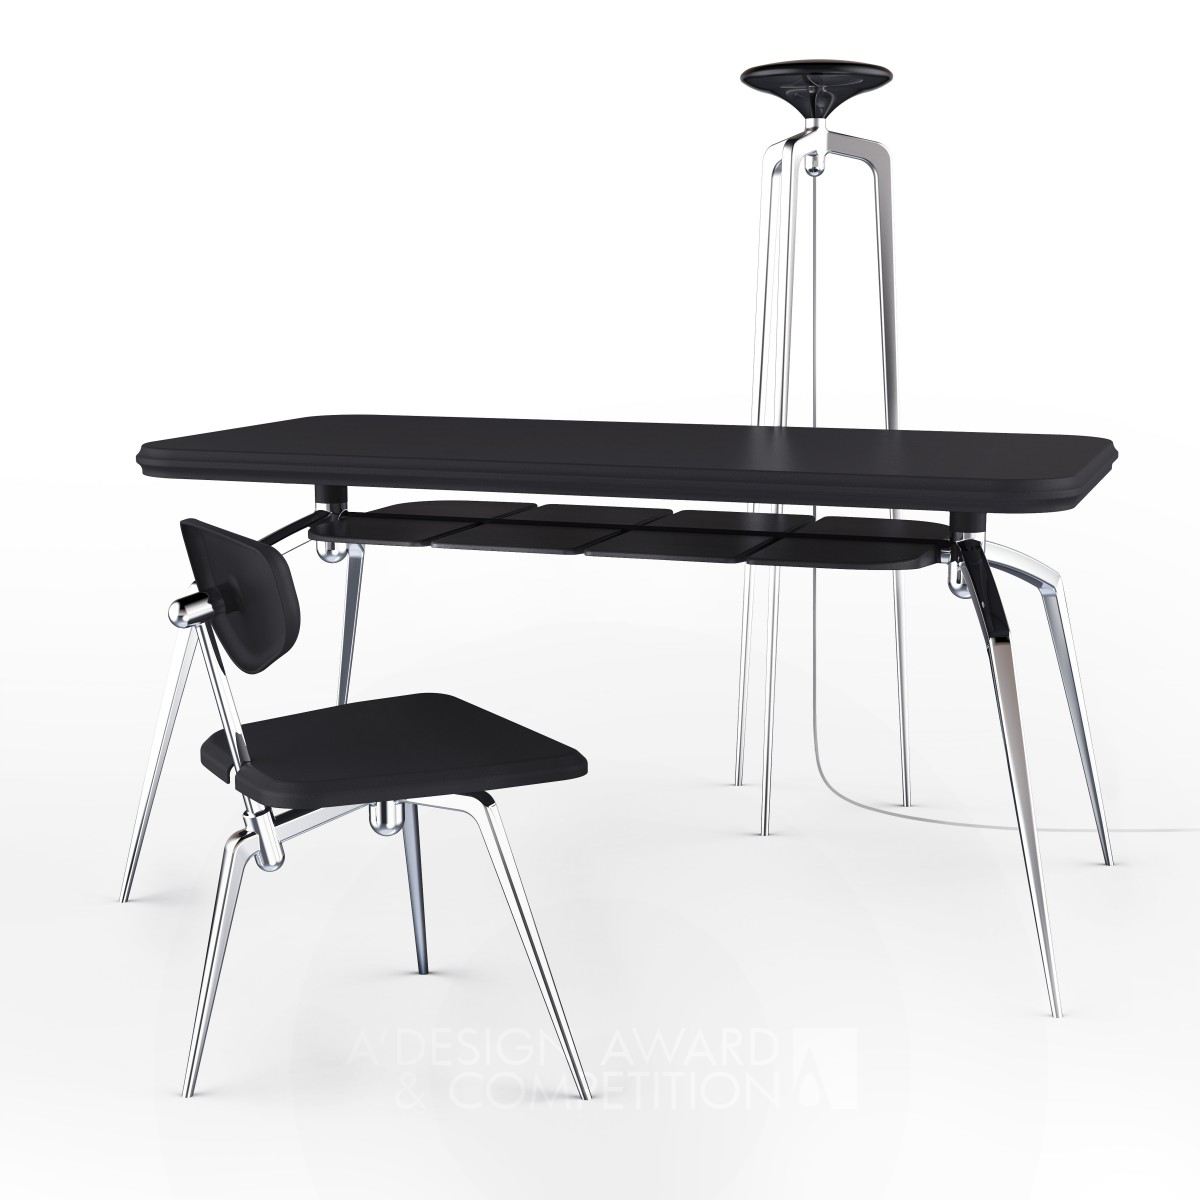 Black Steel Novelty and Comfortable by Wei Jingye and Wang Ruilin Bronze Furniture Design Award Winner 2020 